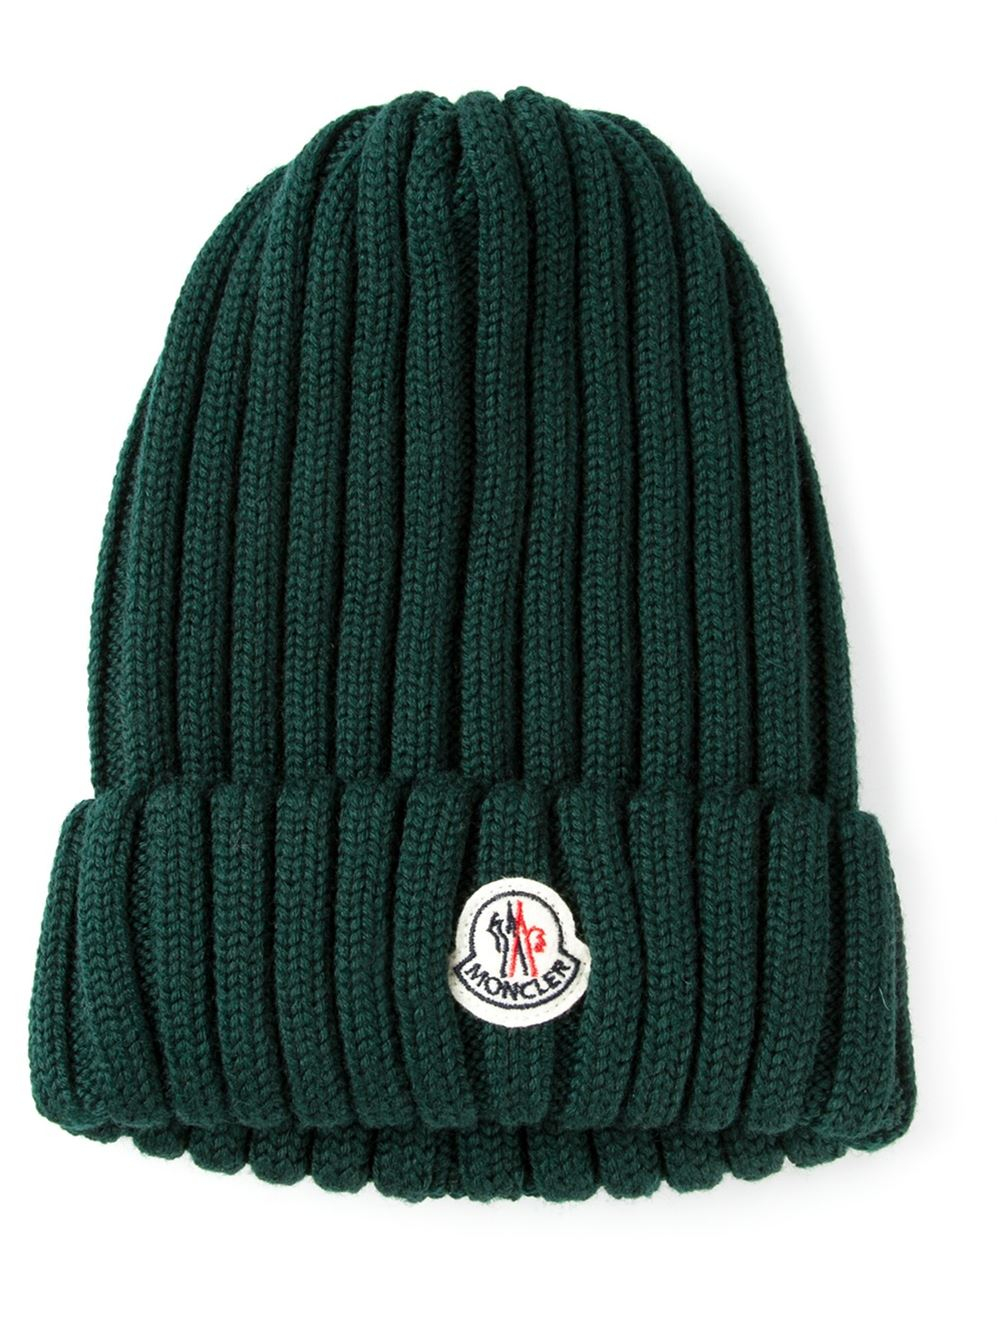 moncler green hat